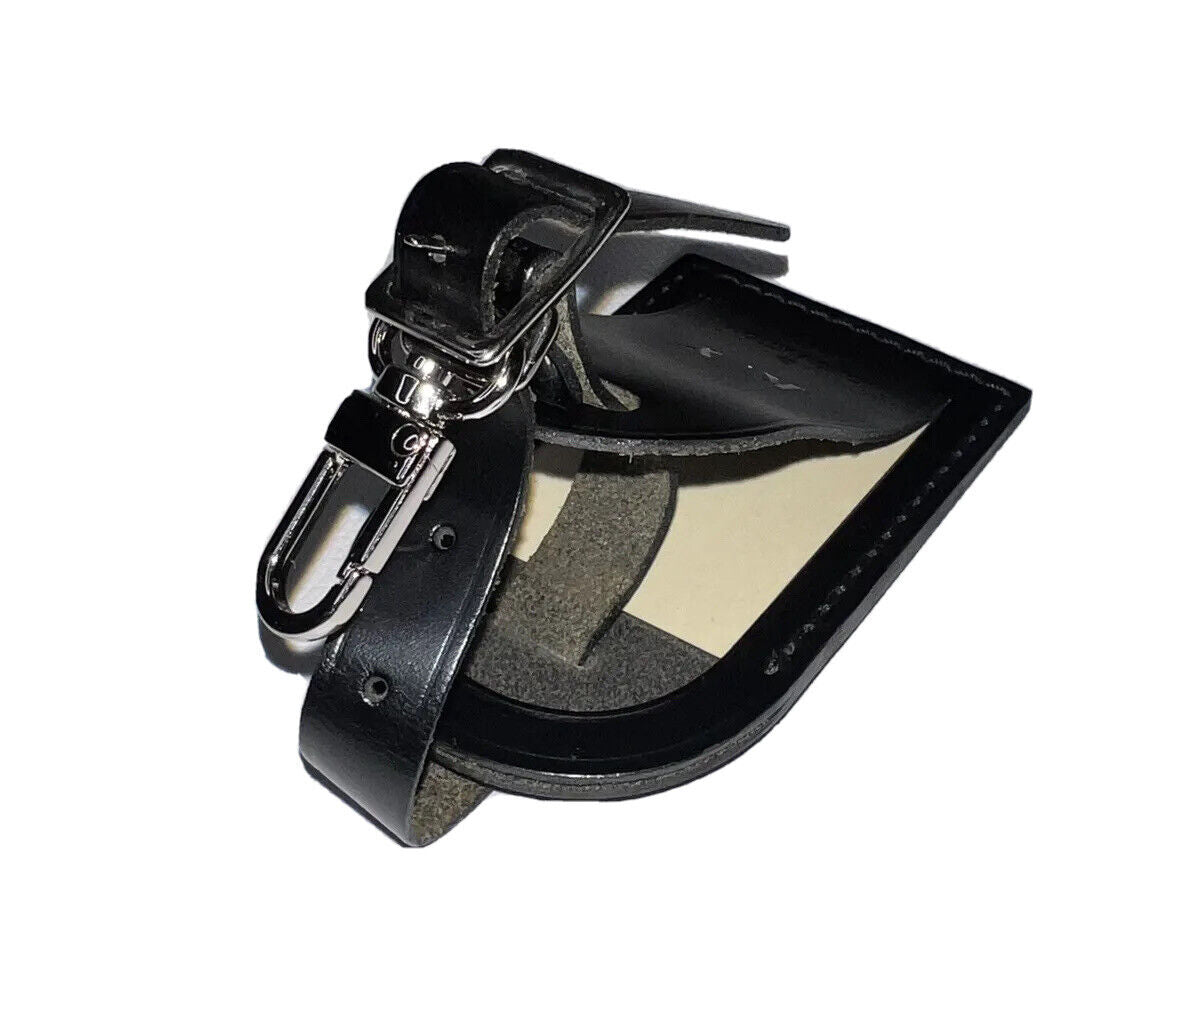 Louis Vuitton Luggage Tag w/ KY Initials Silvertone Black Calfskin Paris 🇫🇷